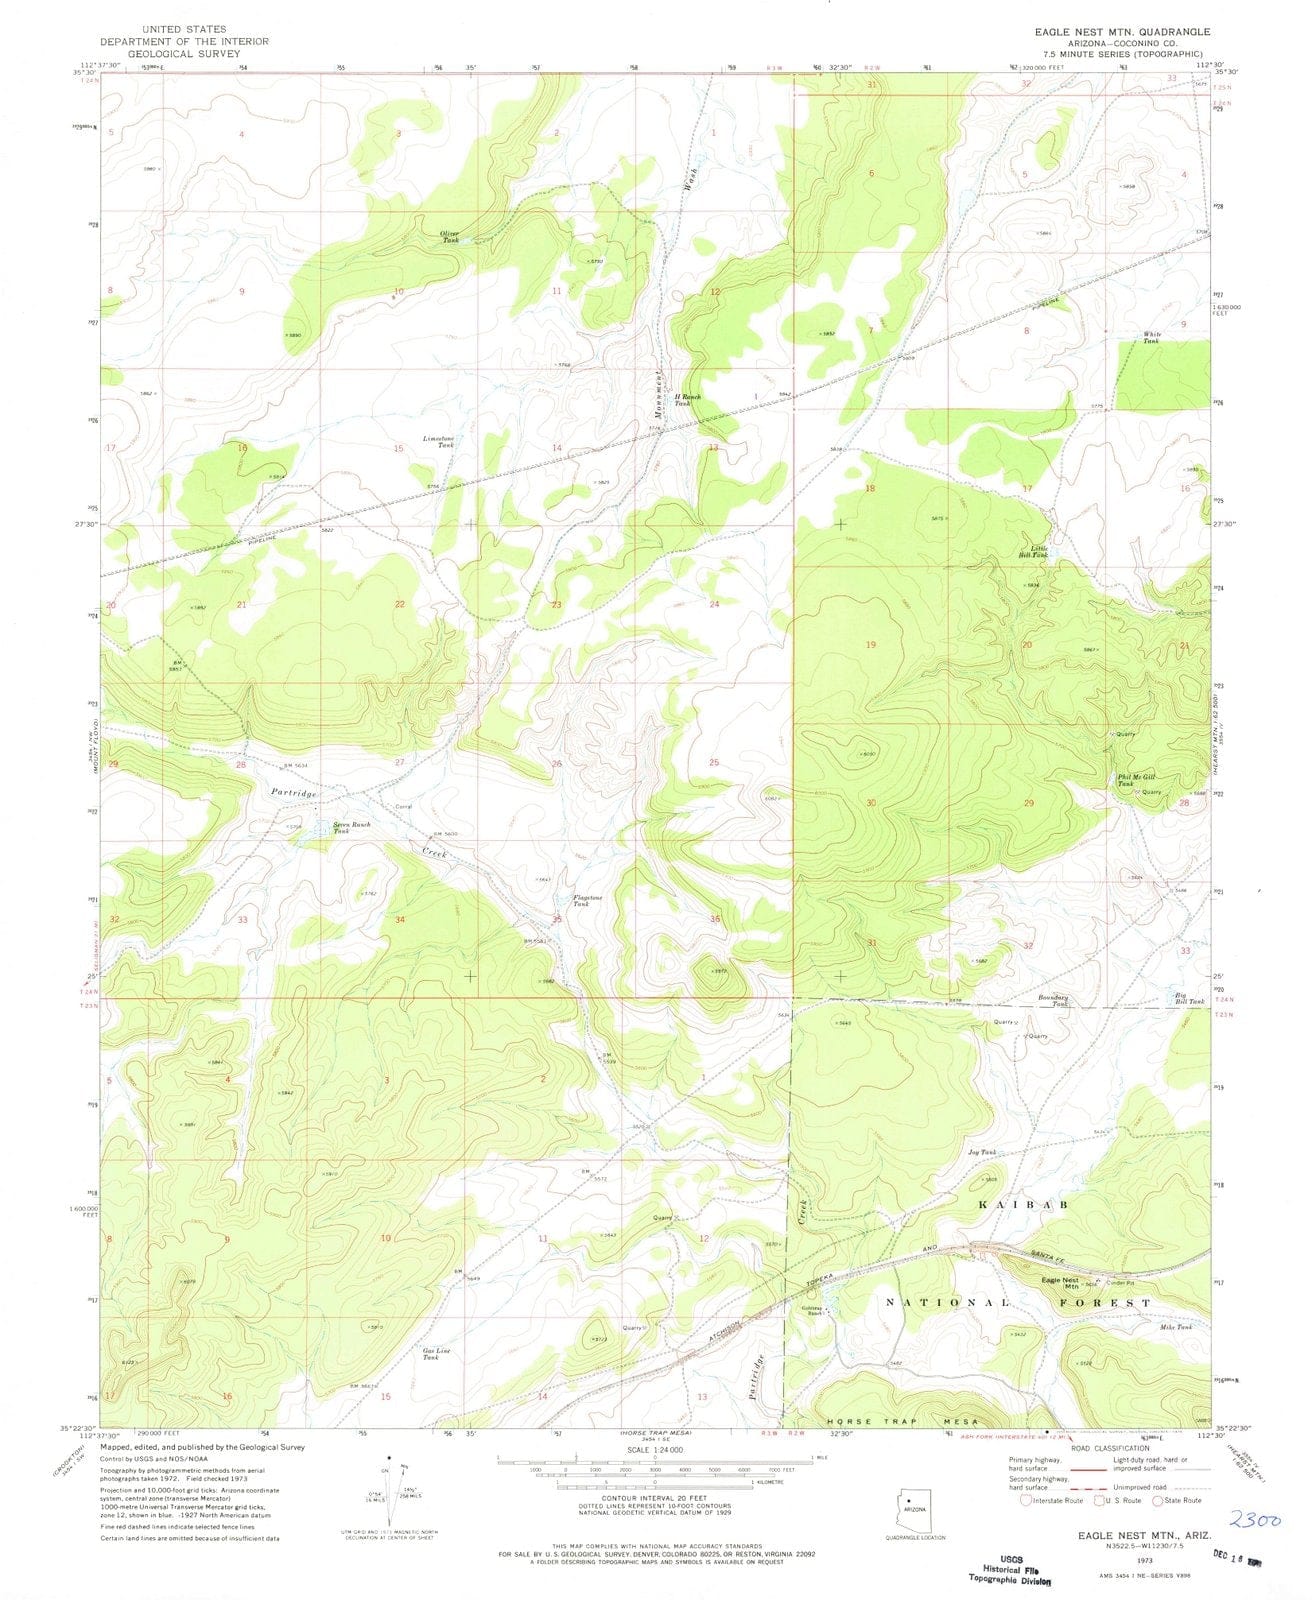 1973 Eaglest MTN, AZ - Arizona - USGS Topographic Map